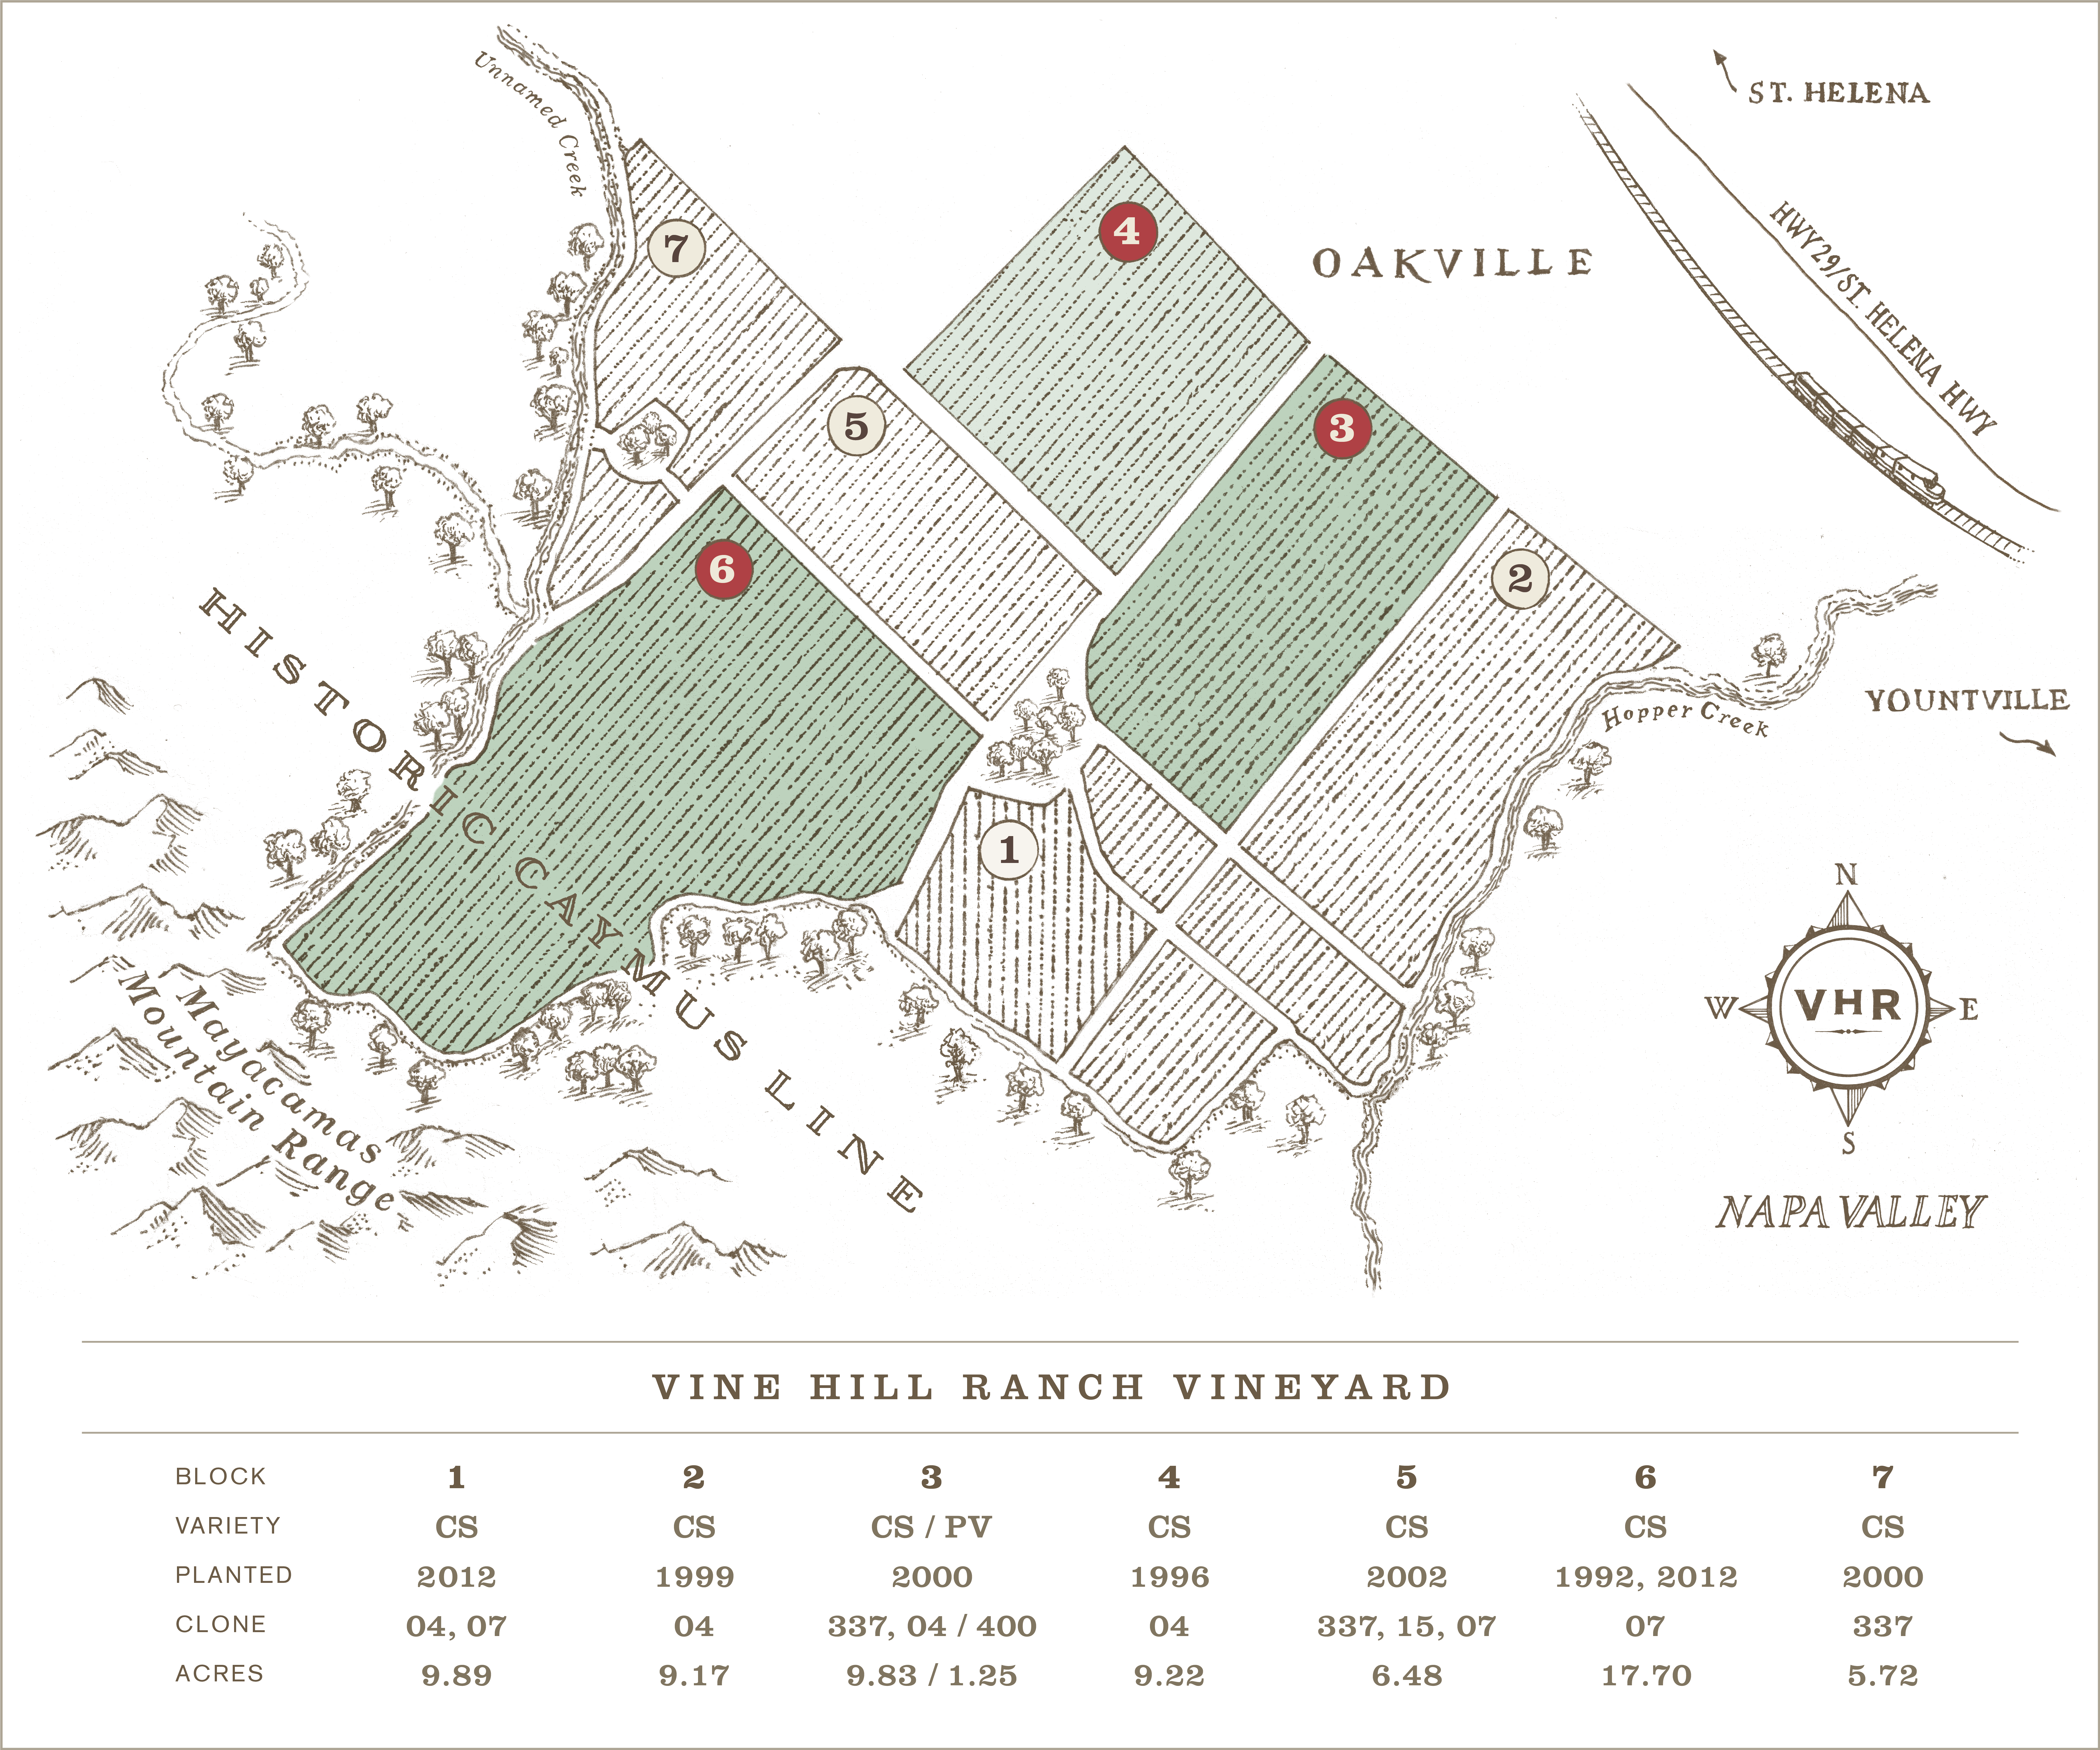 vineyard map plots: 3, 4, 6